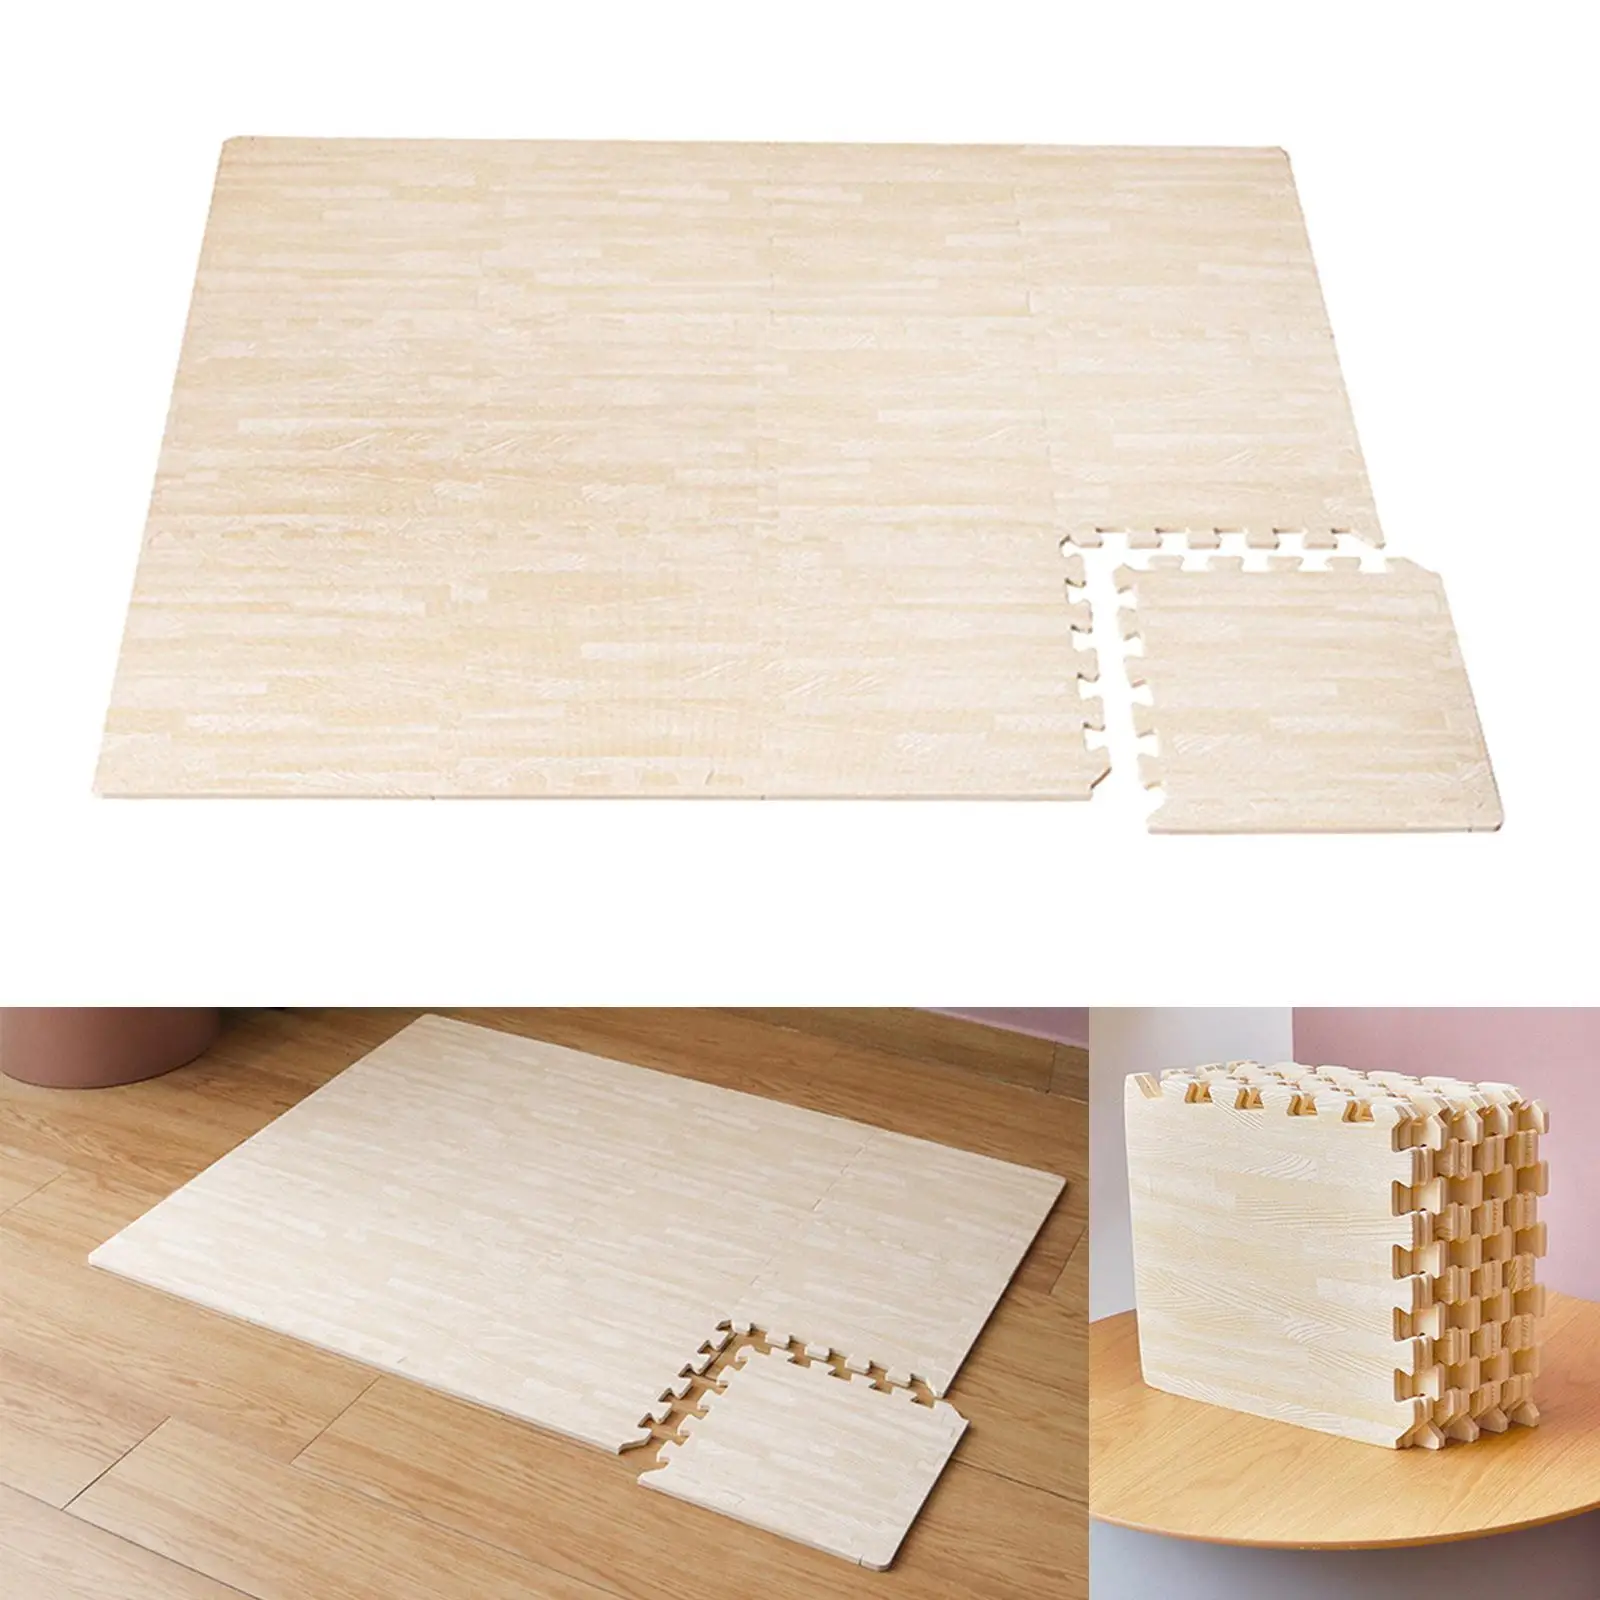 12 Pieces Wood Grain Eva Foam Puzzle Mat Waterproof Padding Tile Pad for Yoga, Meditation, Exercises, 30.5x30.5cm